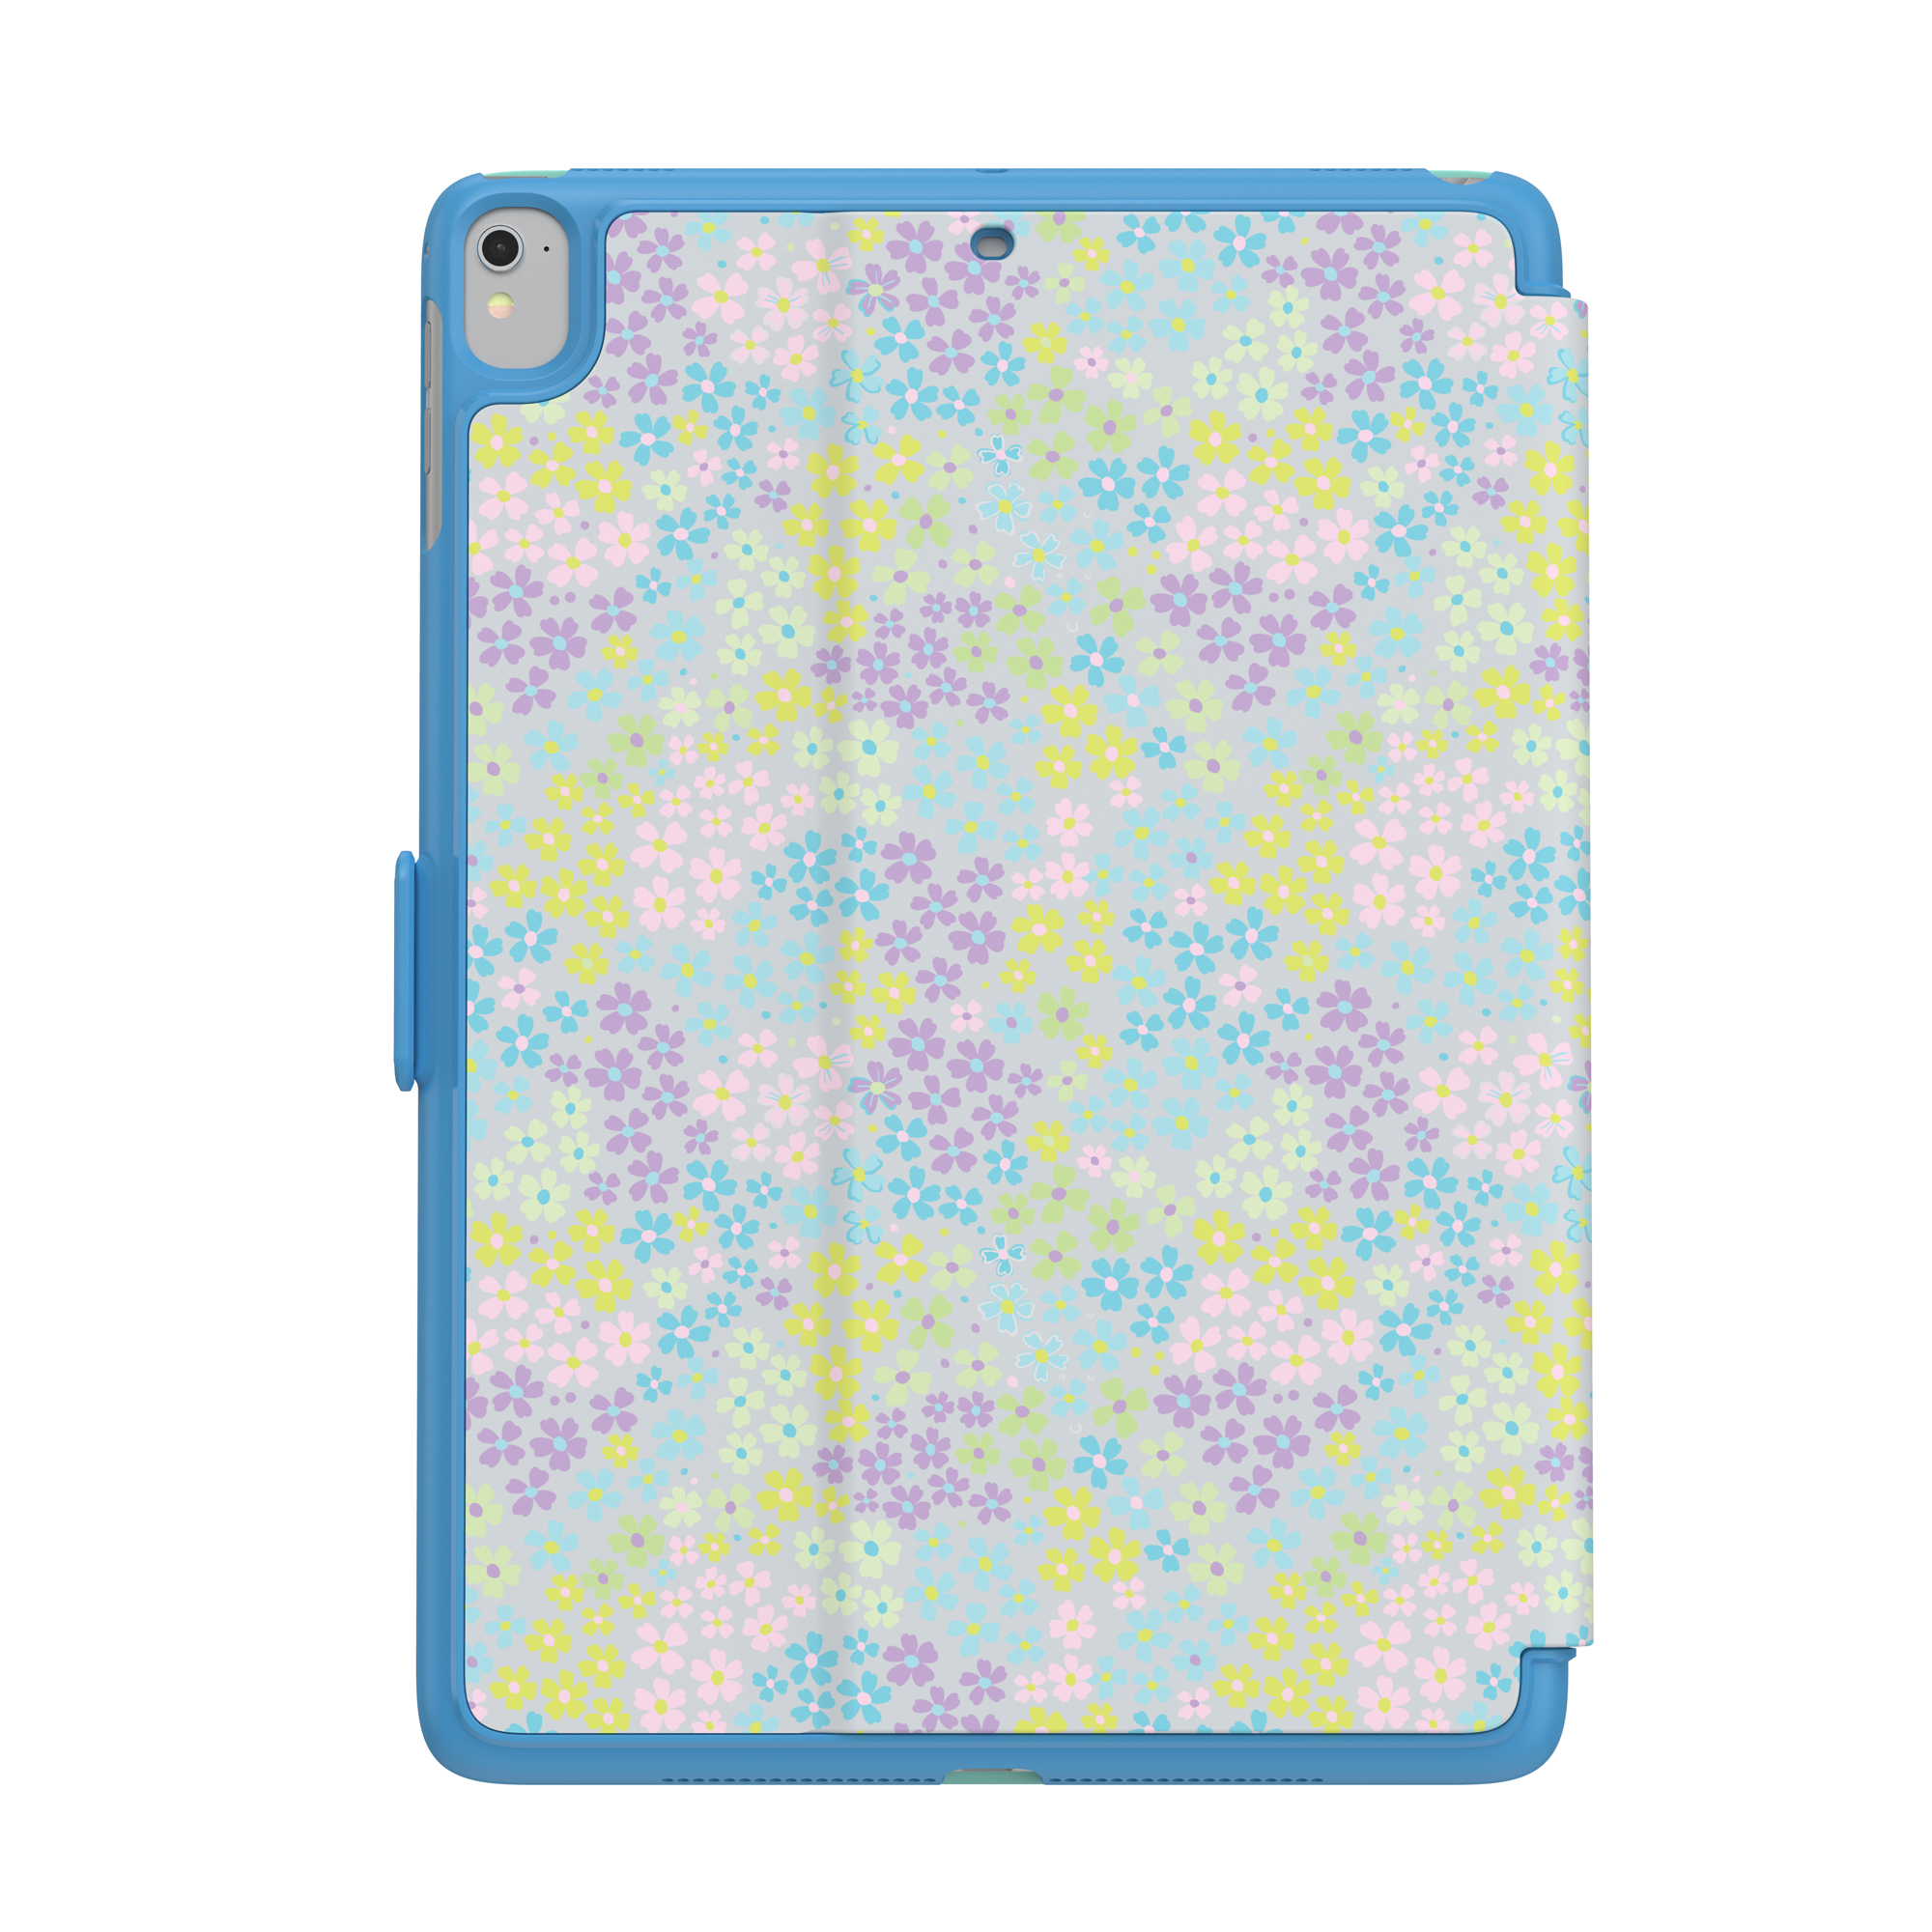 Speck 9.7 " iPad Air 2 Folio Case, Flower Print Aster Purple & Blue - image 4 of 7